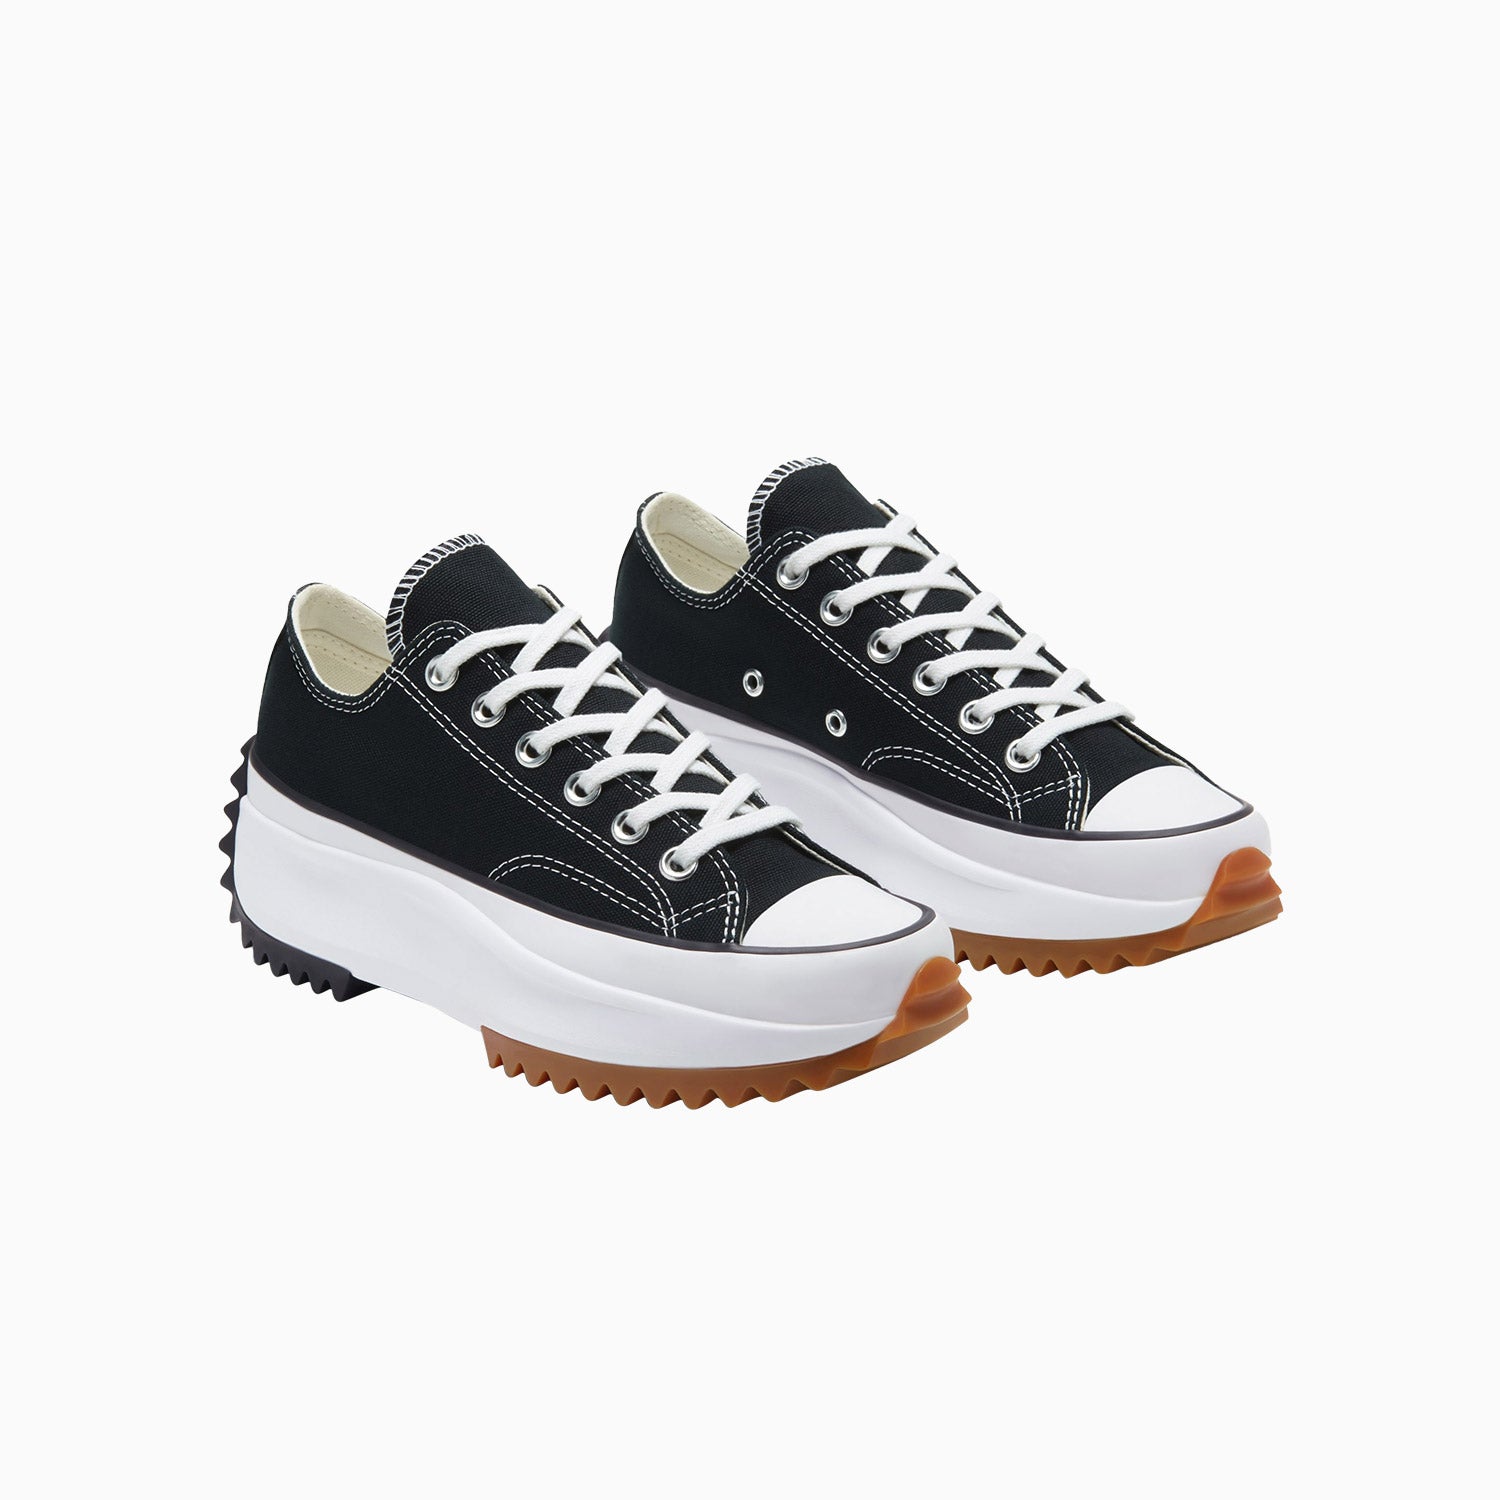 converse-chuck-taylor-all-star-run-star-hike-ox-platform-shoes-168816c